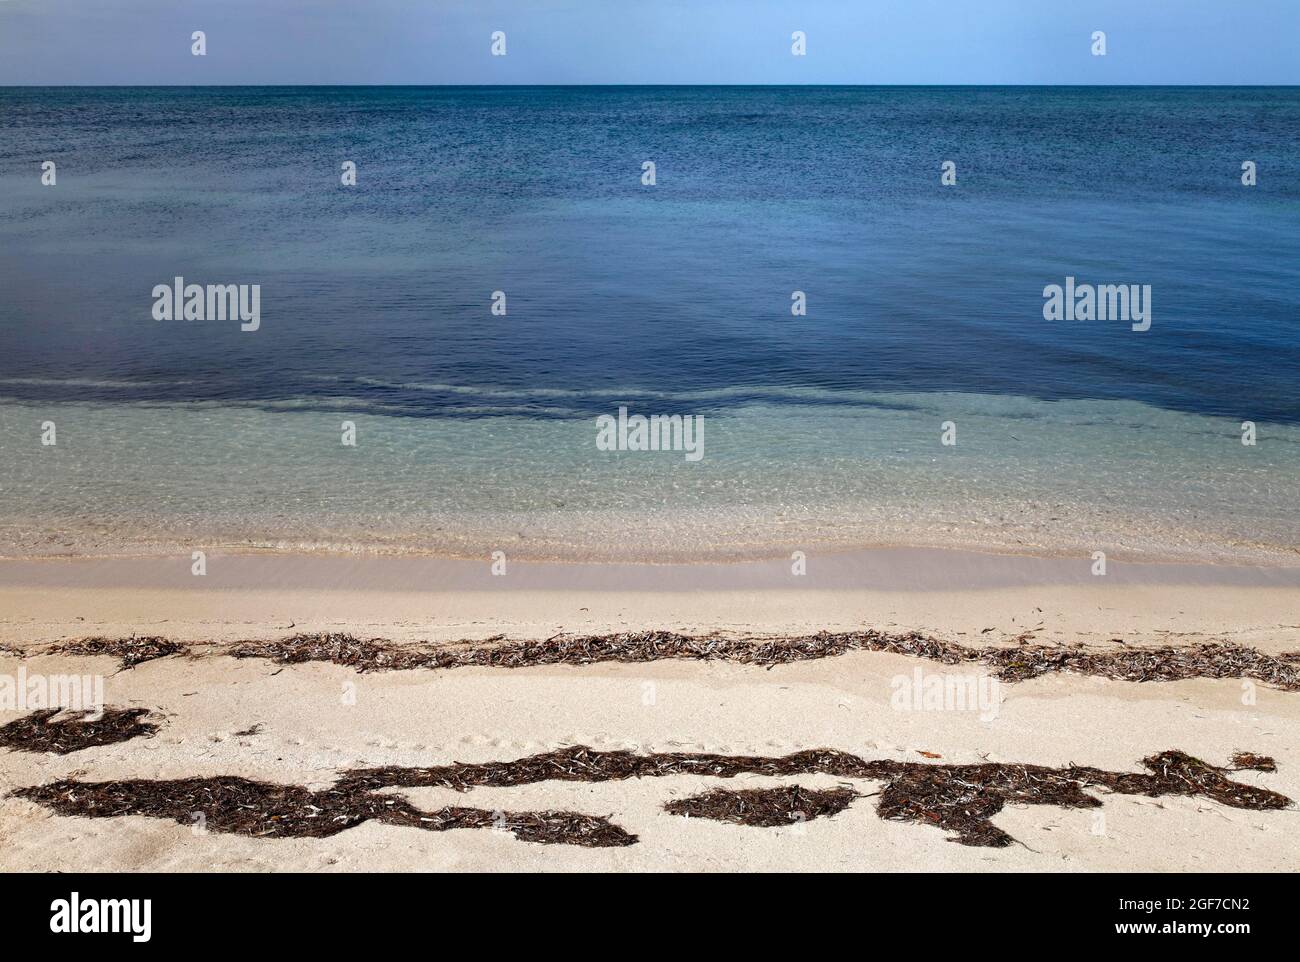 Plage avec algues, mer des Caraïbes calme, horizon, Anclita, Caraïbes, Islande, Cuba Banque D'Images